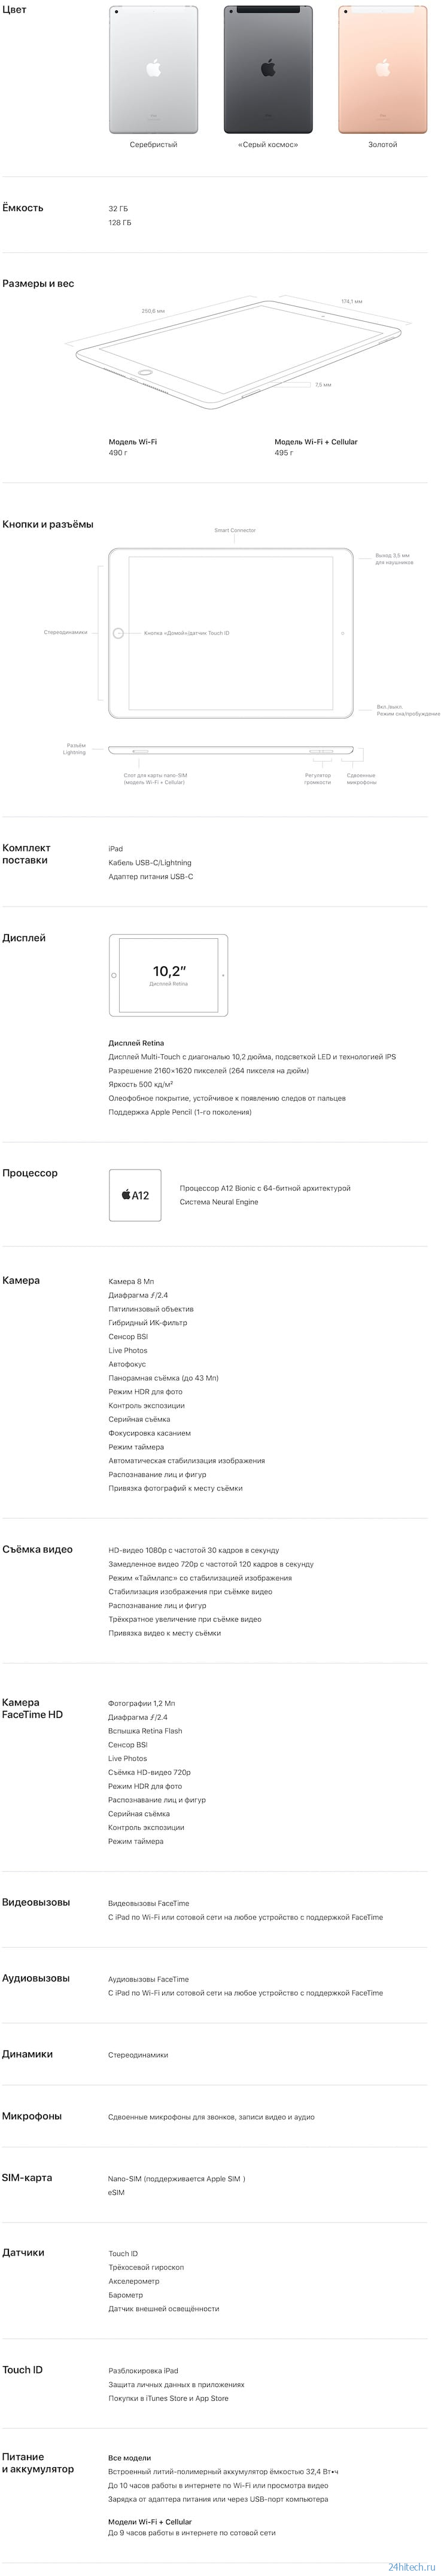 Обзор iPad 8 (2020): дизайн, характеристики, камеры и цена